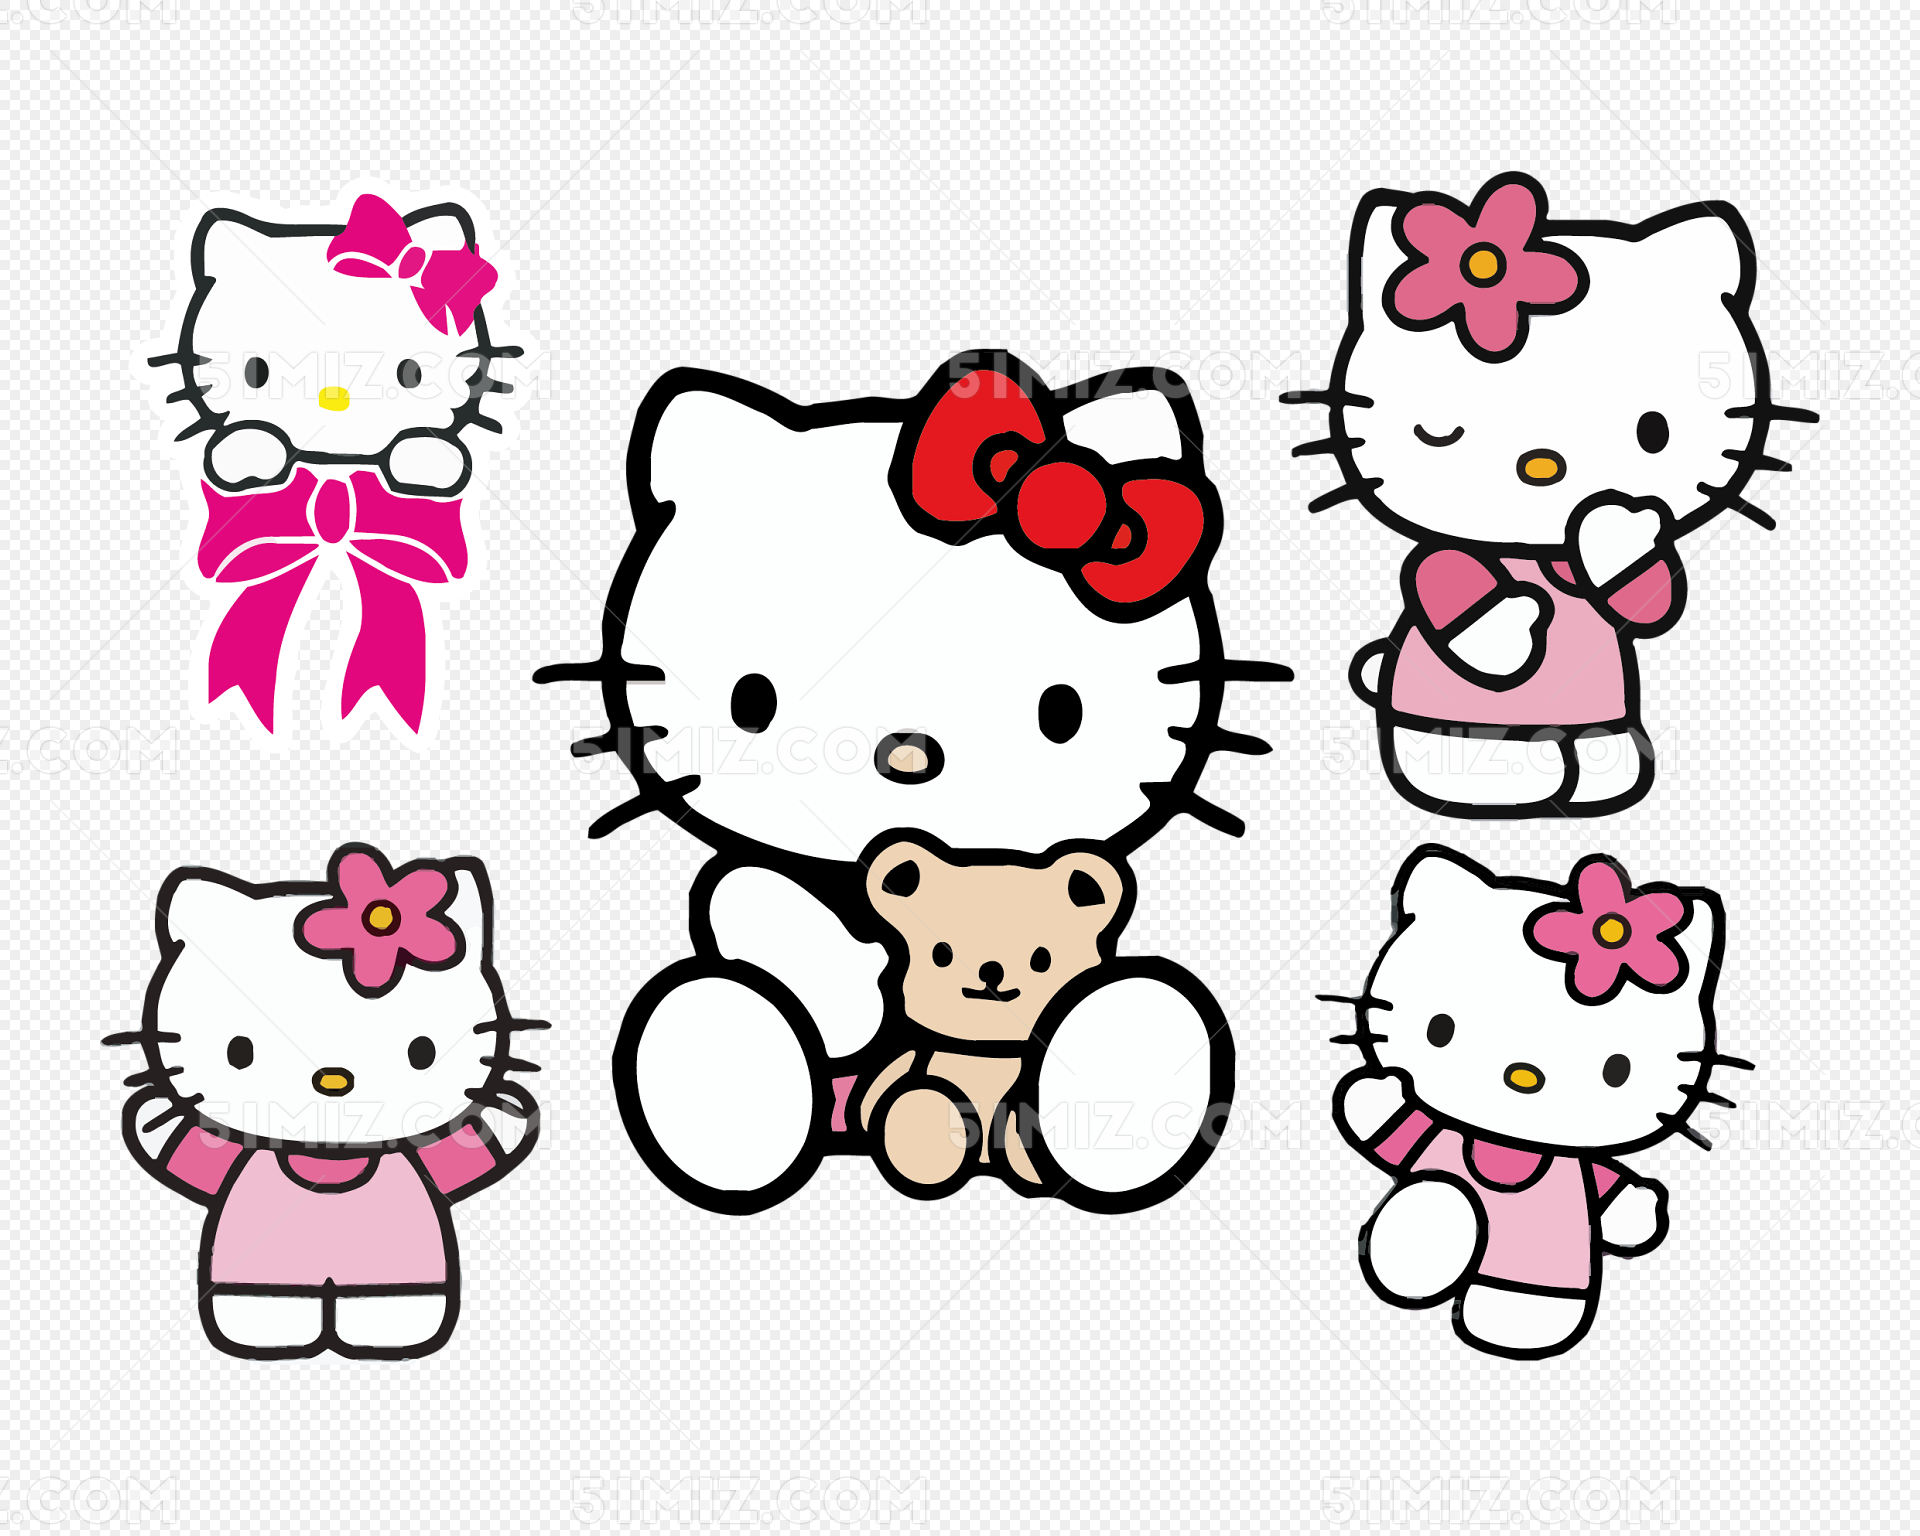 Pink Hello Kitty HD桌面壁纸：宽屏：高清晰度：全屏